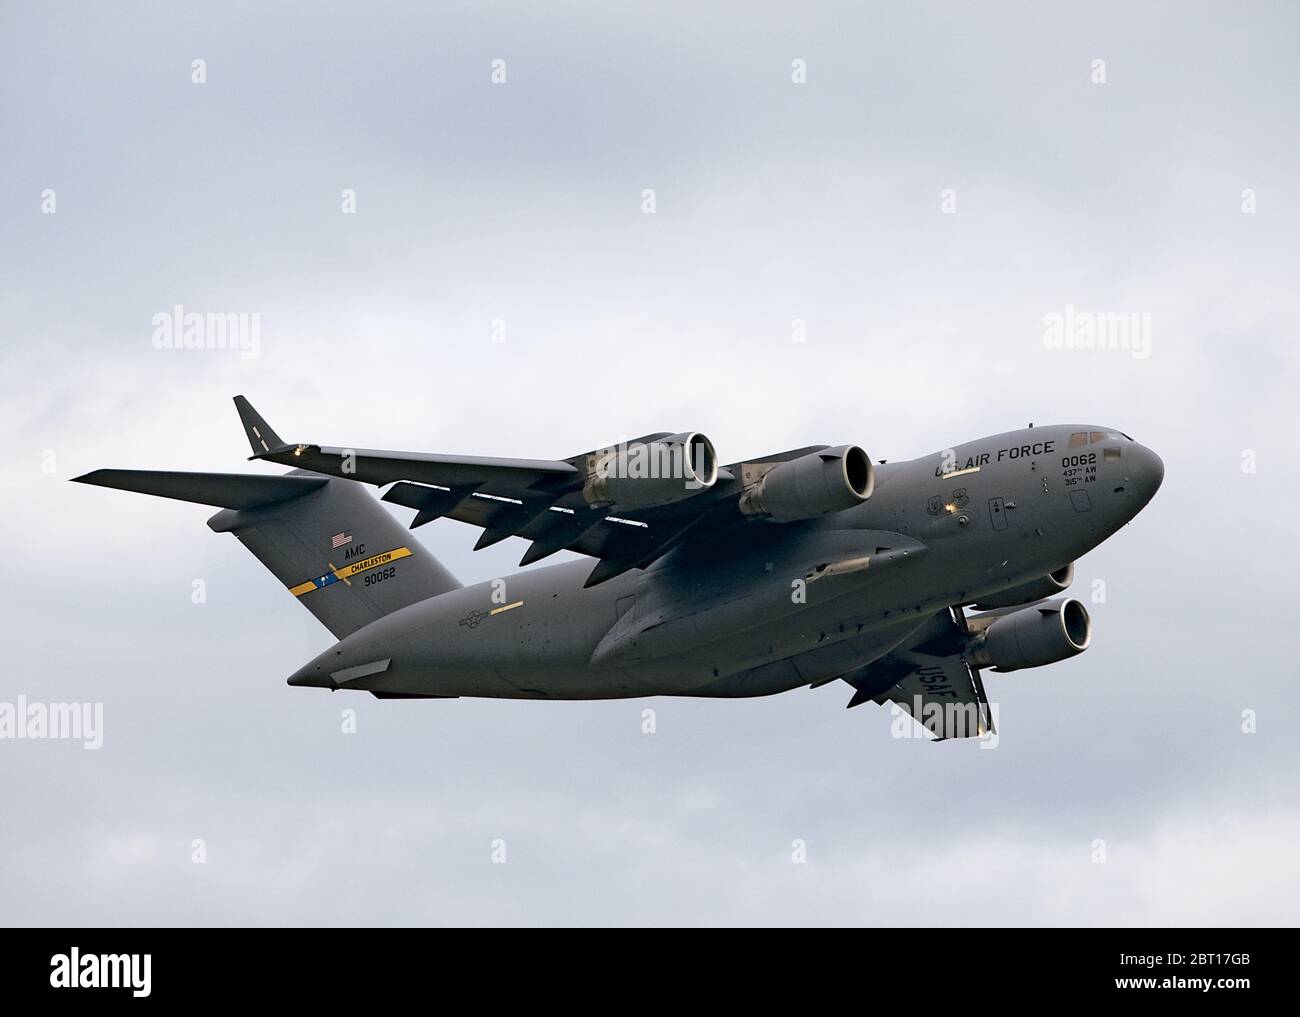 C-17 Takes Off From Allentown, Pennsylvania Stock Photo